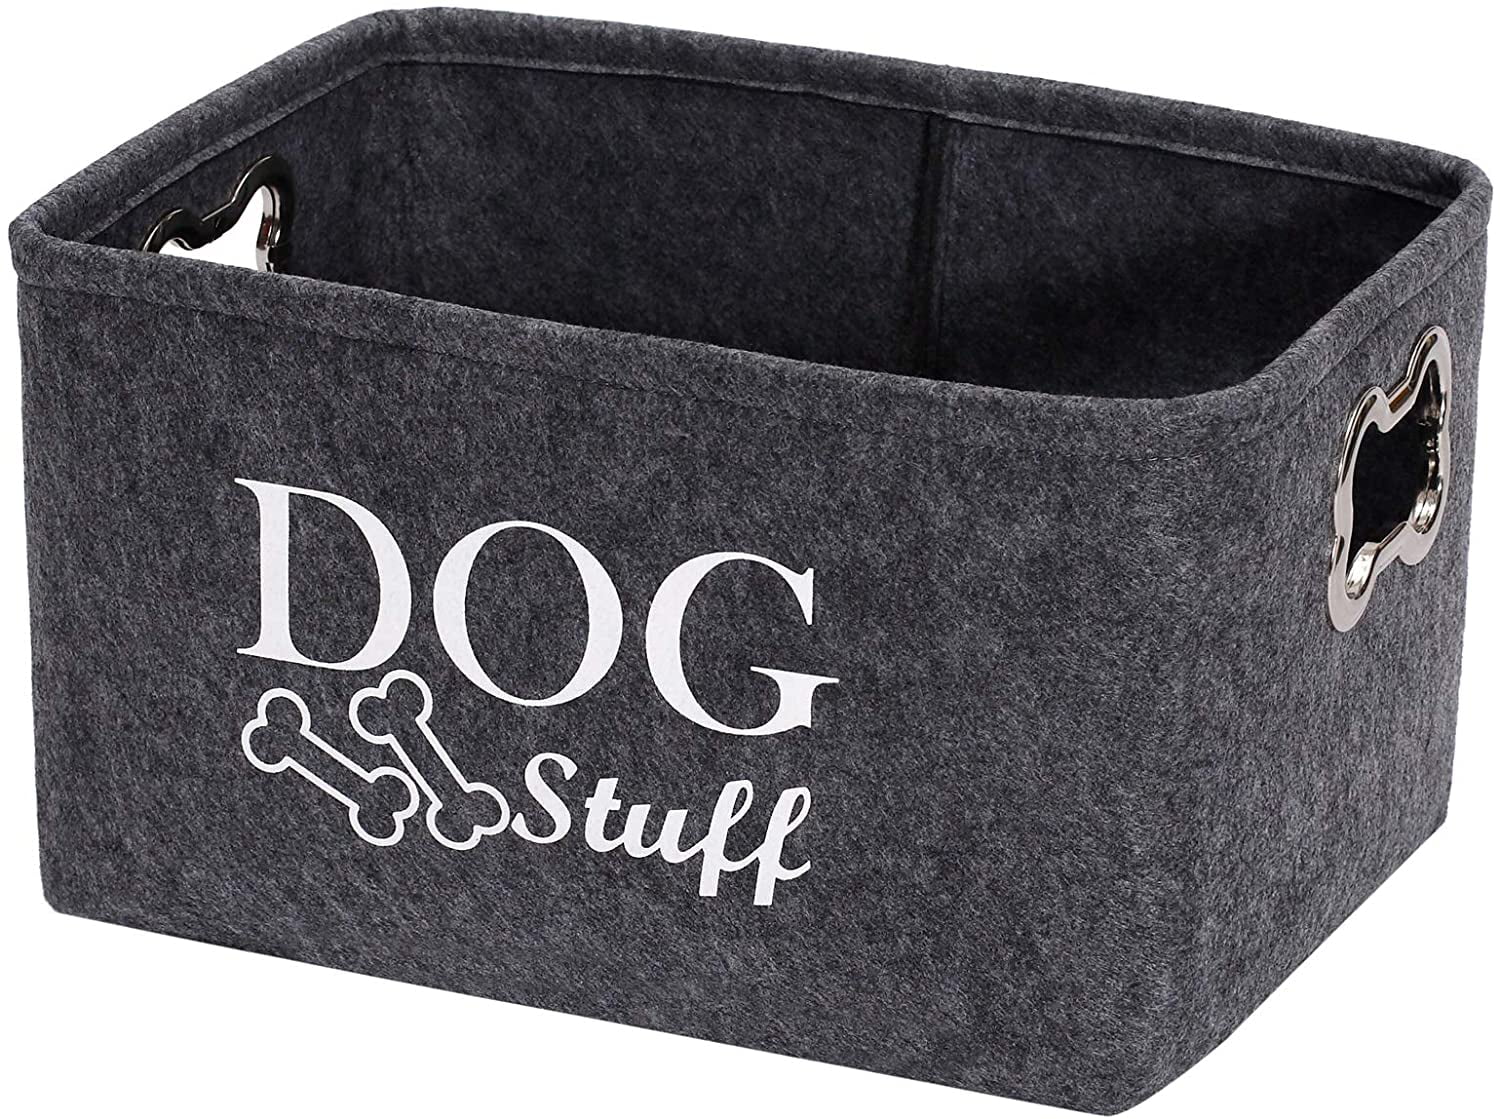 Dog Shirts Dog Clothing Dog Coats Geyecete Linen Storage Basket Bin Chest Organizer Gift Baskets C568- Beige Dog Dresses Perfect for Organizing Dog Apparel & Accessories Storage Dog Toys